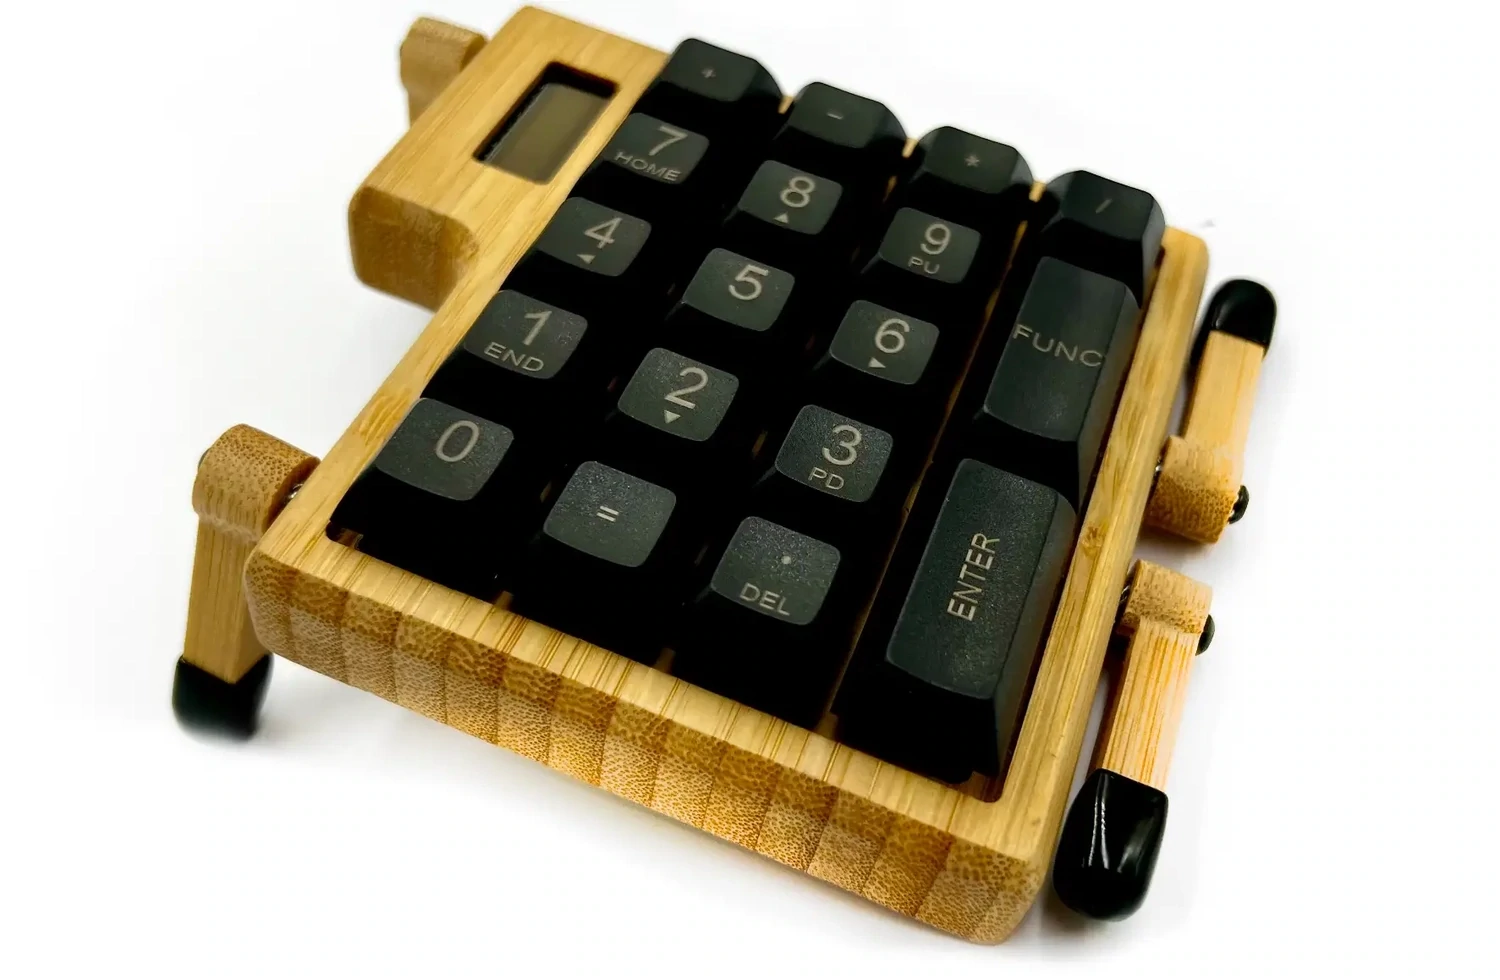 YamPAD: Fully Assembled Custom Mechanical Keyboard